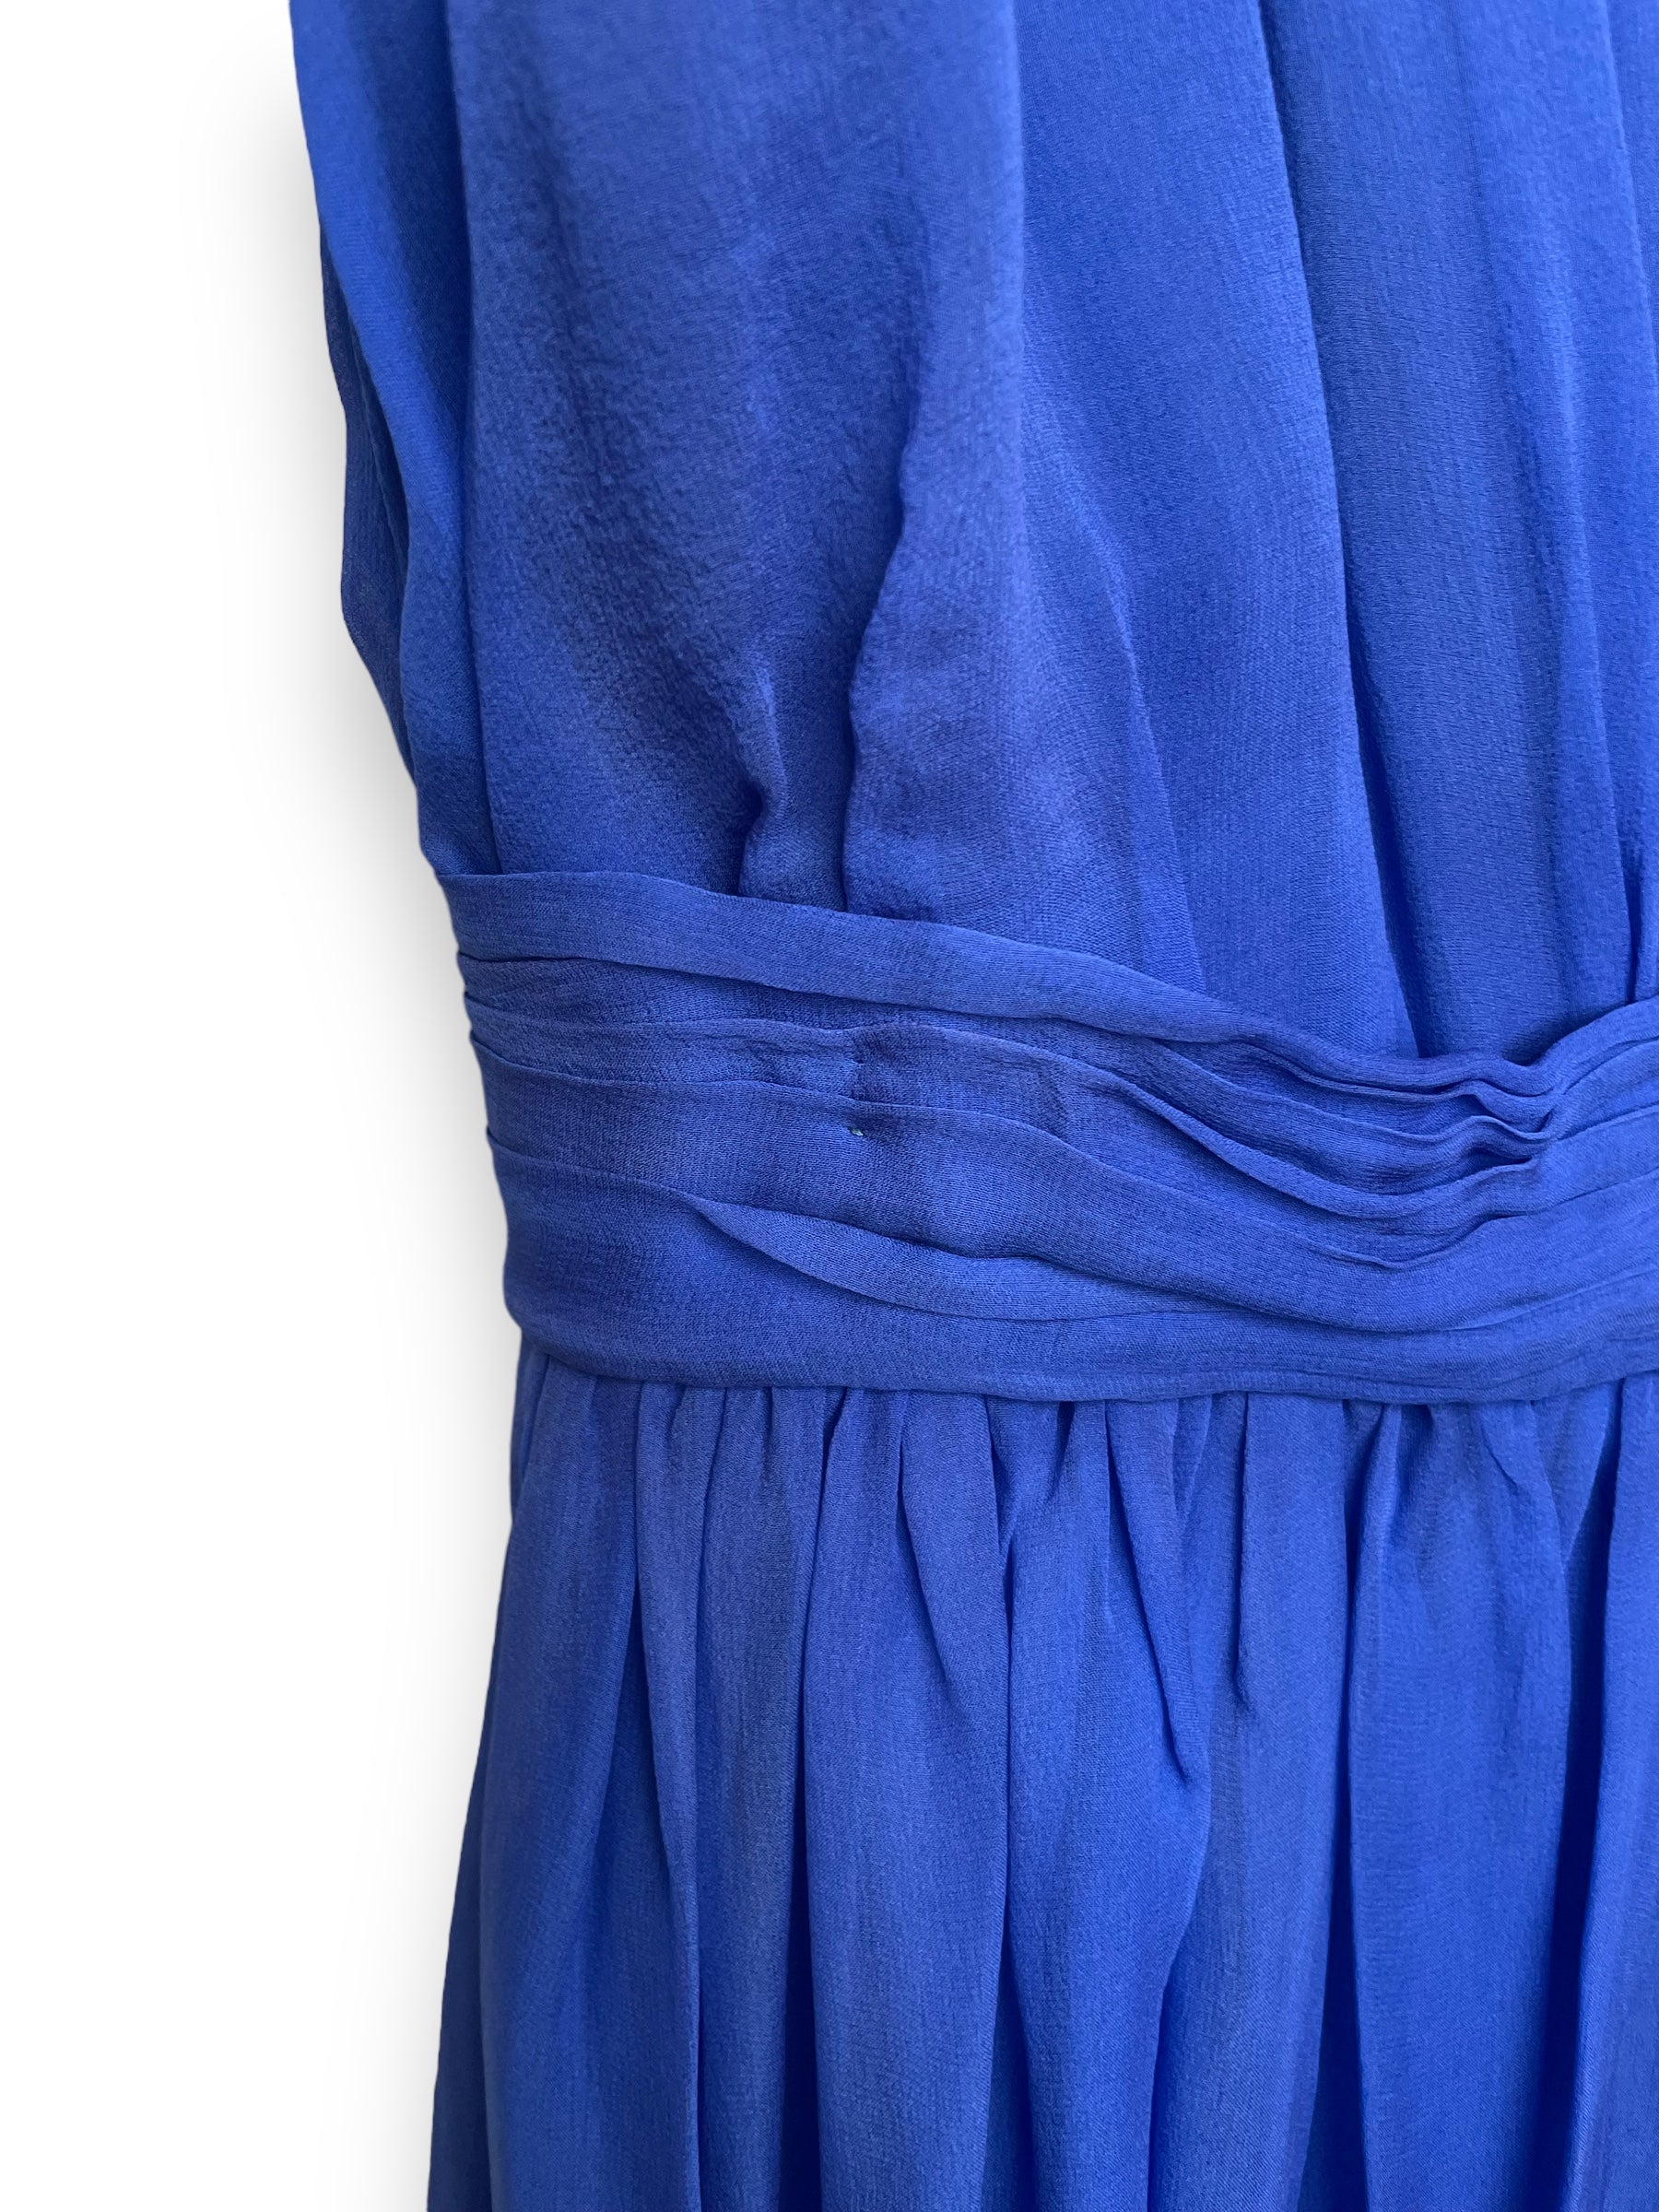 Suzy Perette's Cobalt Dress